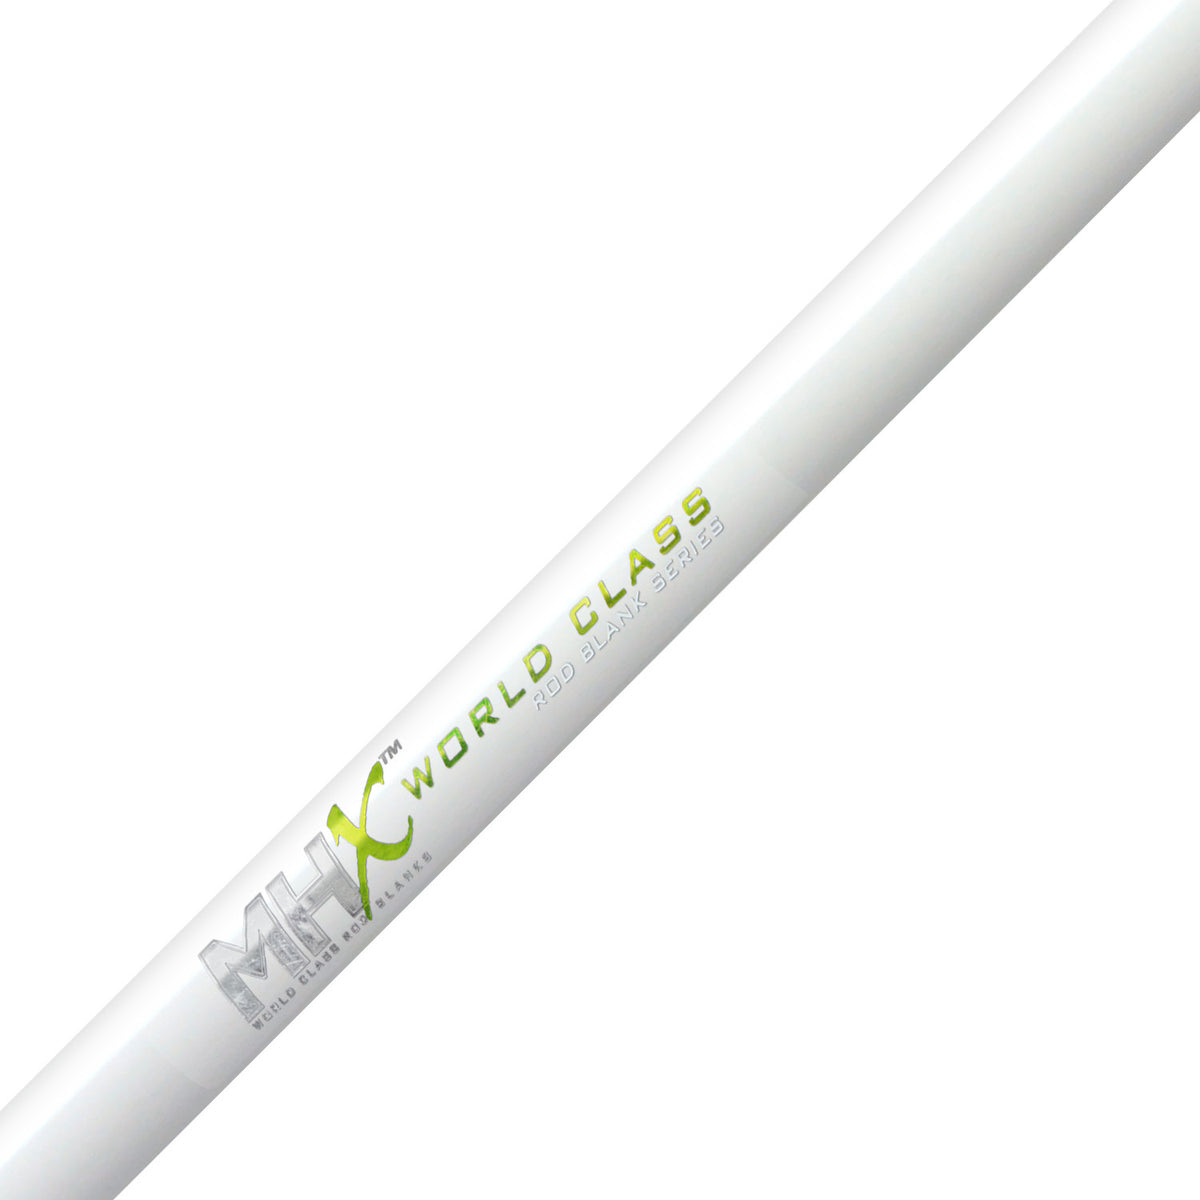 L843 7′0″ Medium Light Saltwater Rod Blank – MHX